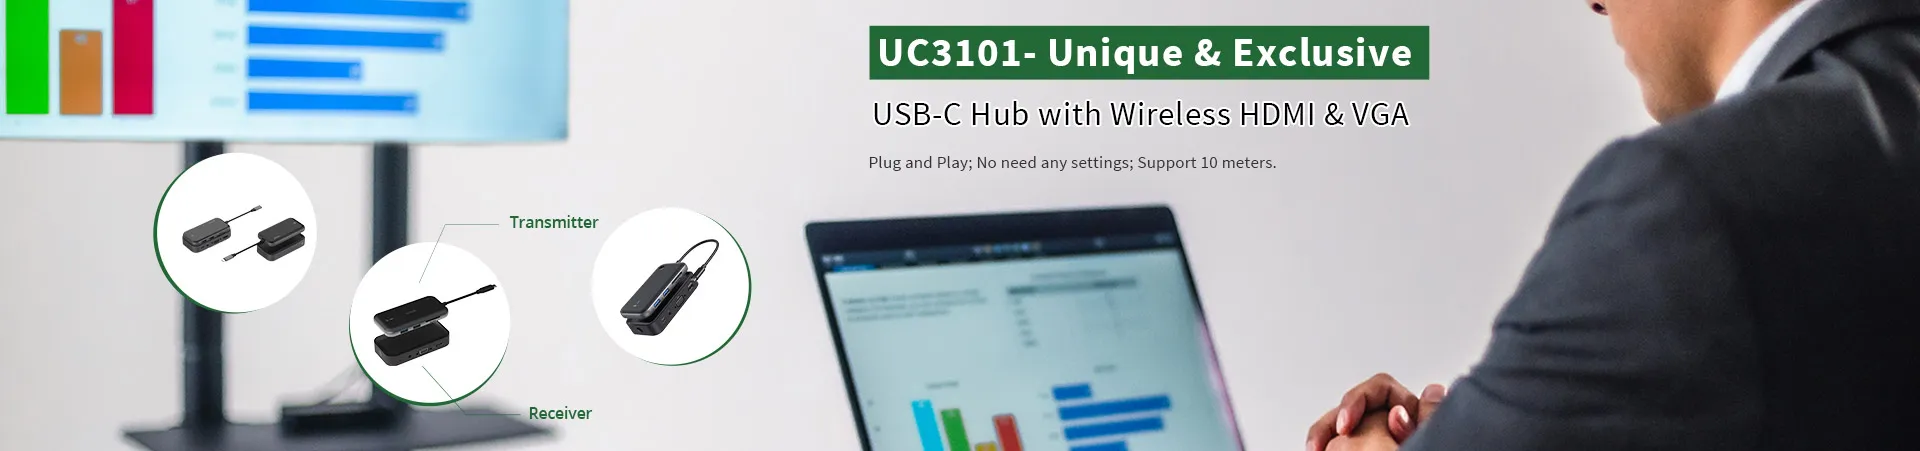 UC3101 USB-C Hub with Wireless Display